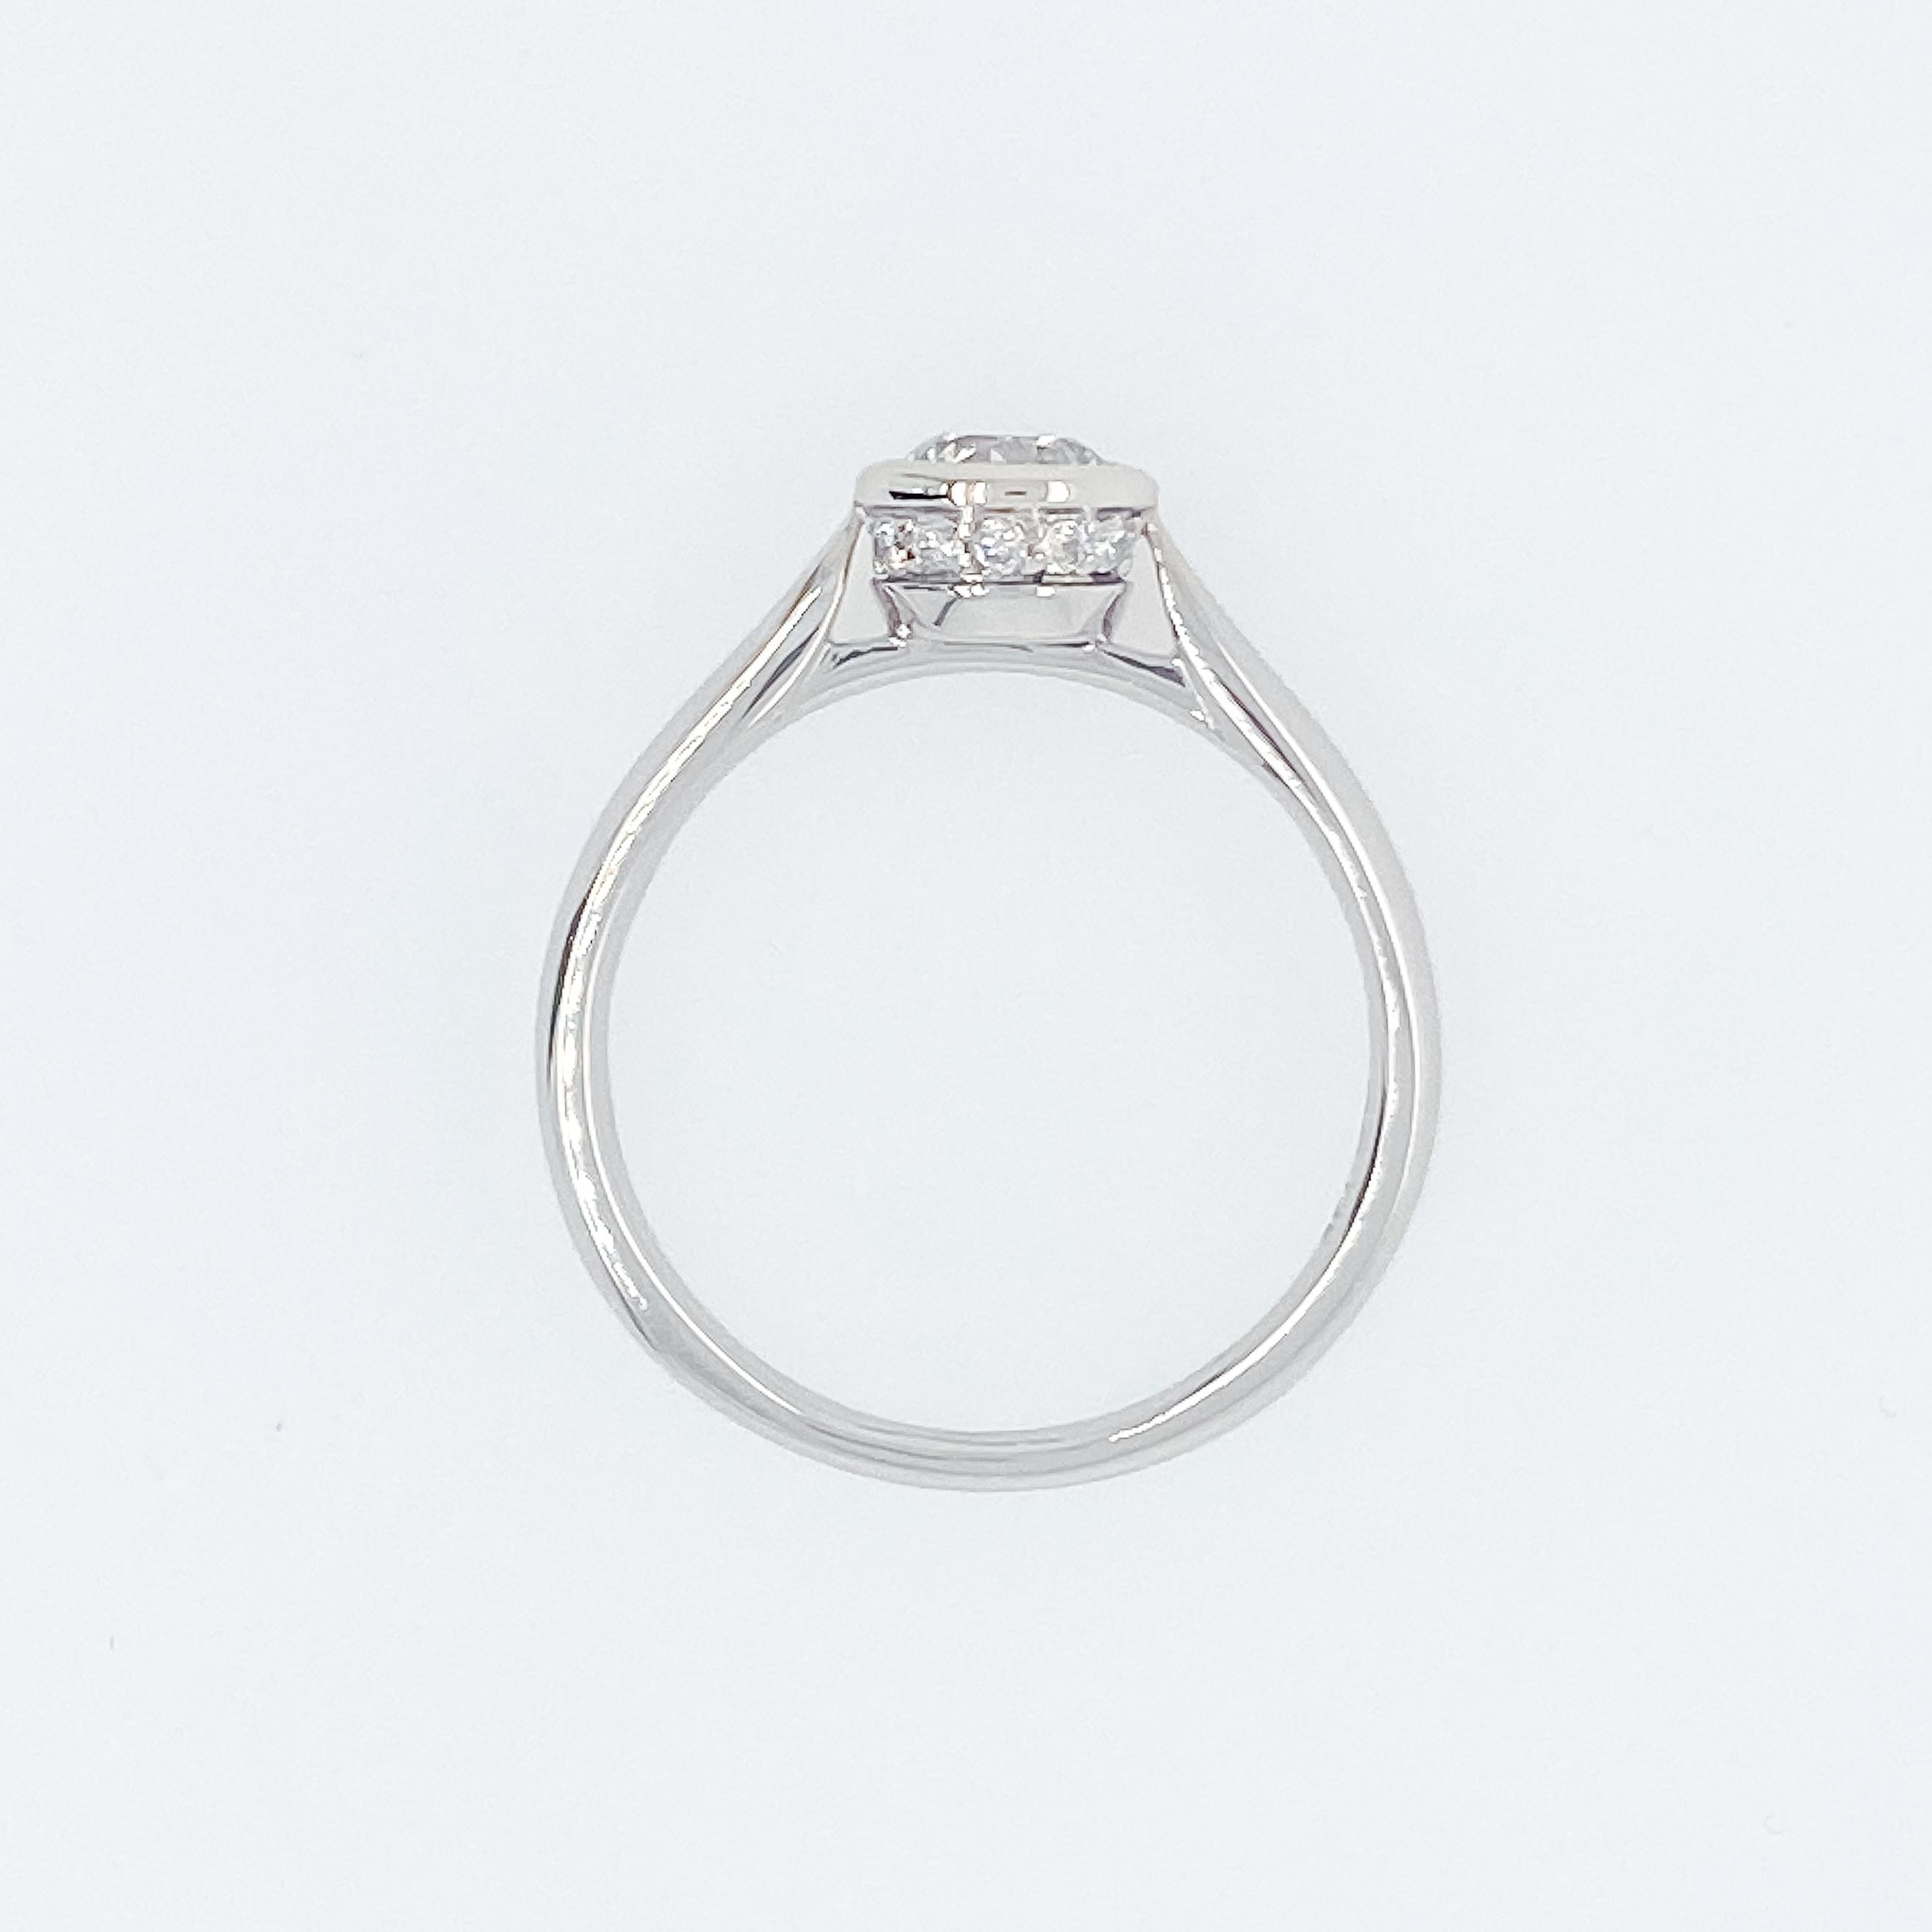 inset diamond engagement ring